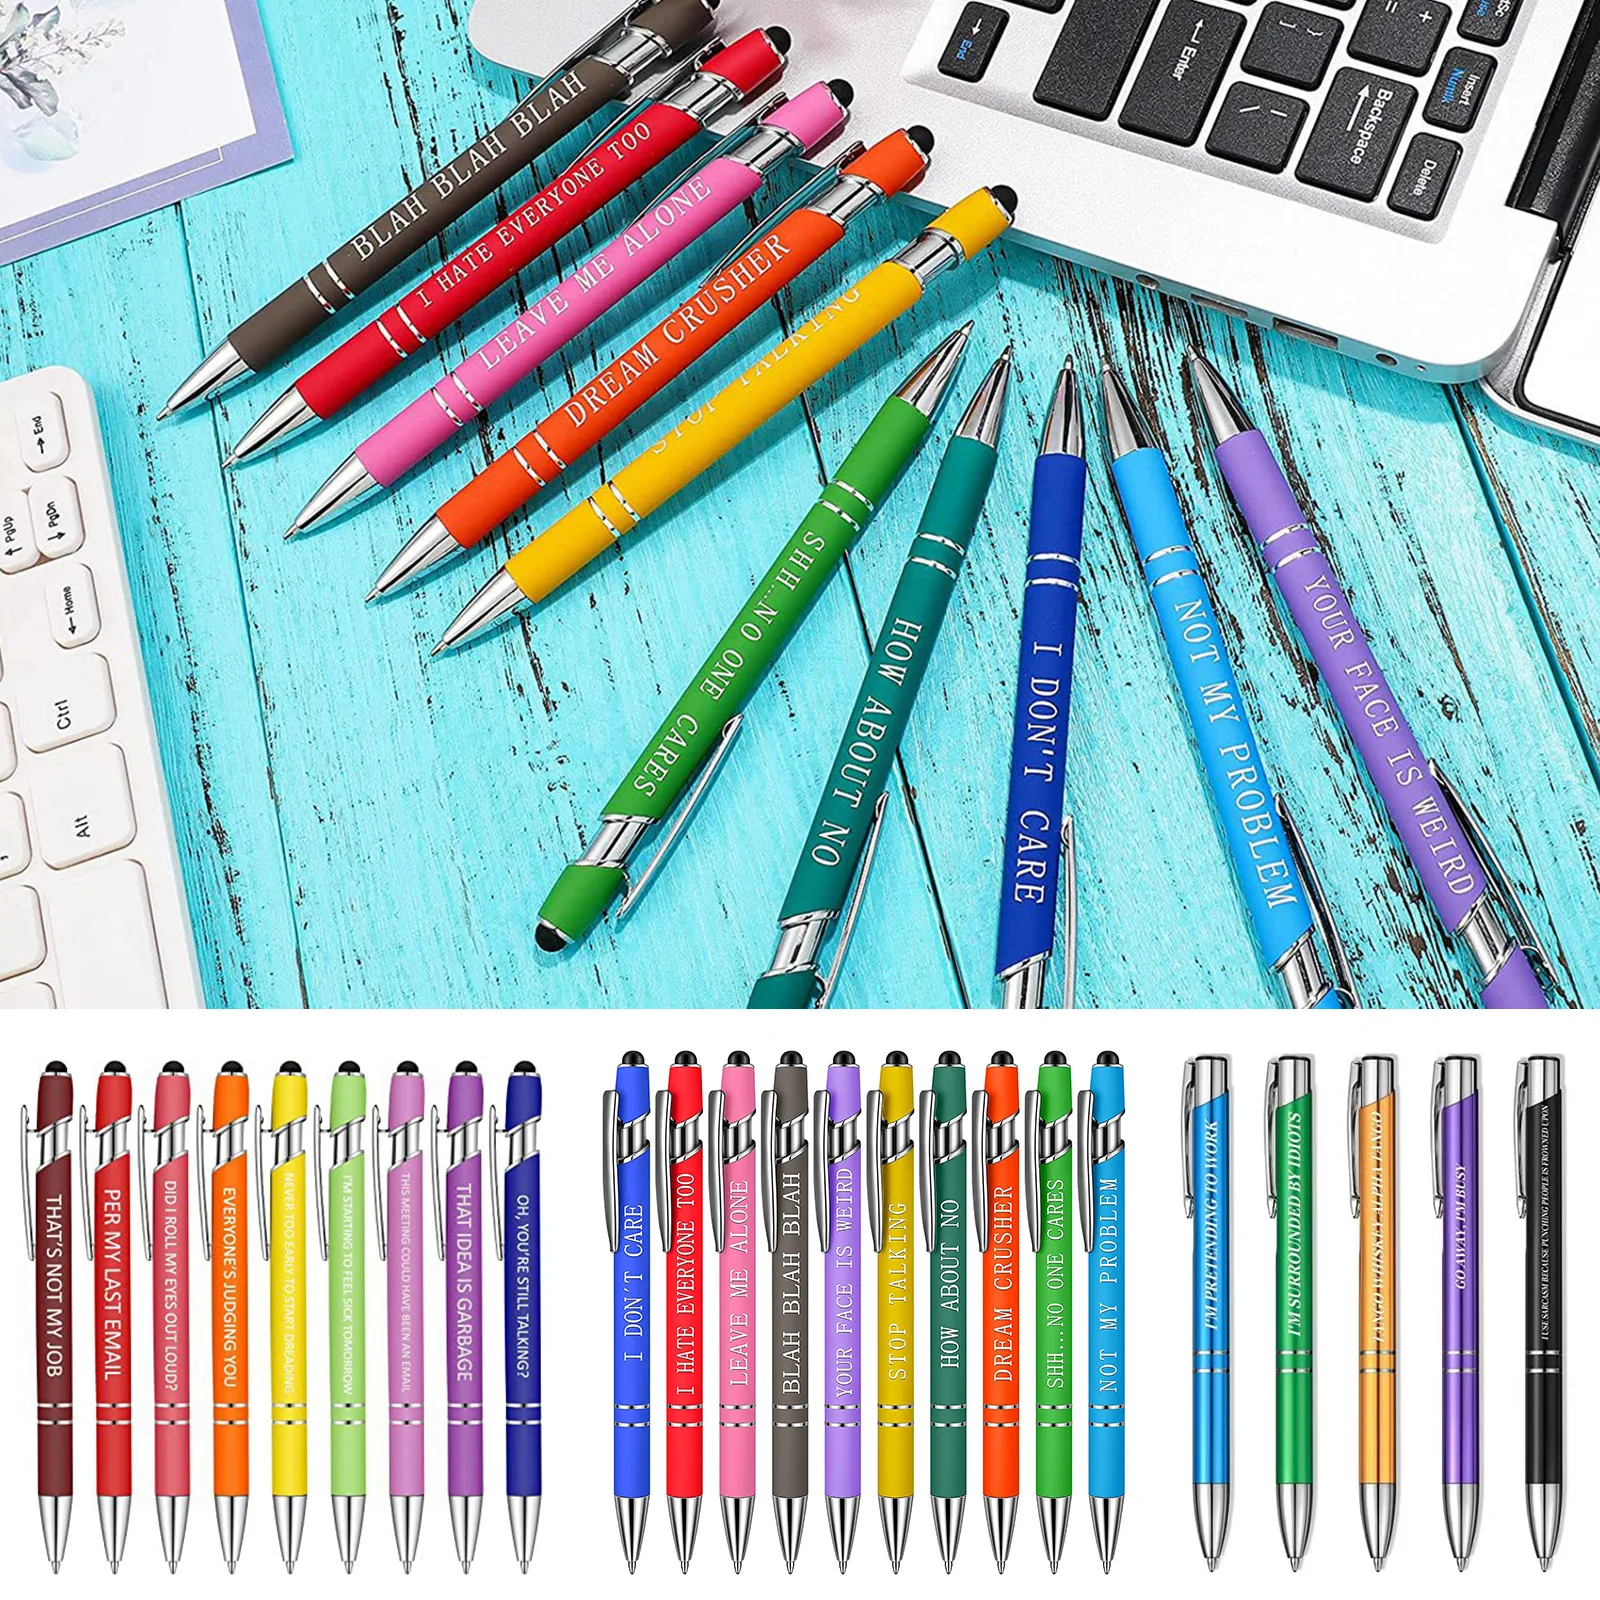 https://ae01.alicdn.com/kf/S8e9321ab686f47f697838c20b59b4e72x/Ballpoint-Pen-Set-Metal-Writing-Pens-Smooth-Inspirational-Pens-Business-Signature-Office-School-Supplies-Christmas-Birthday.jpg